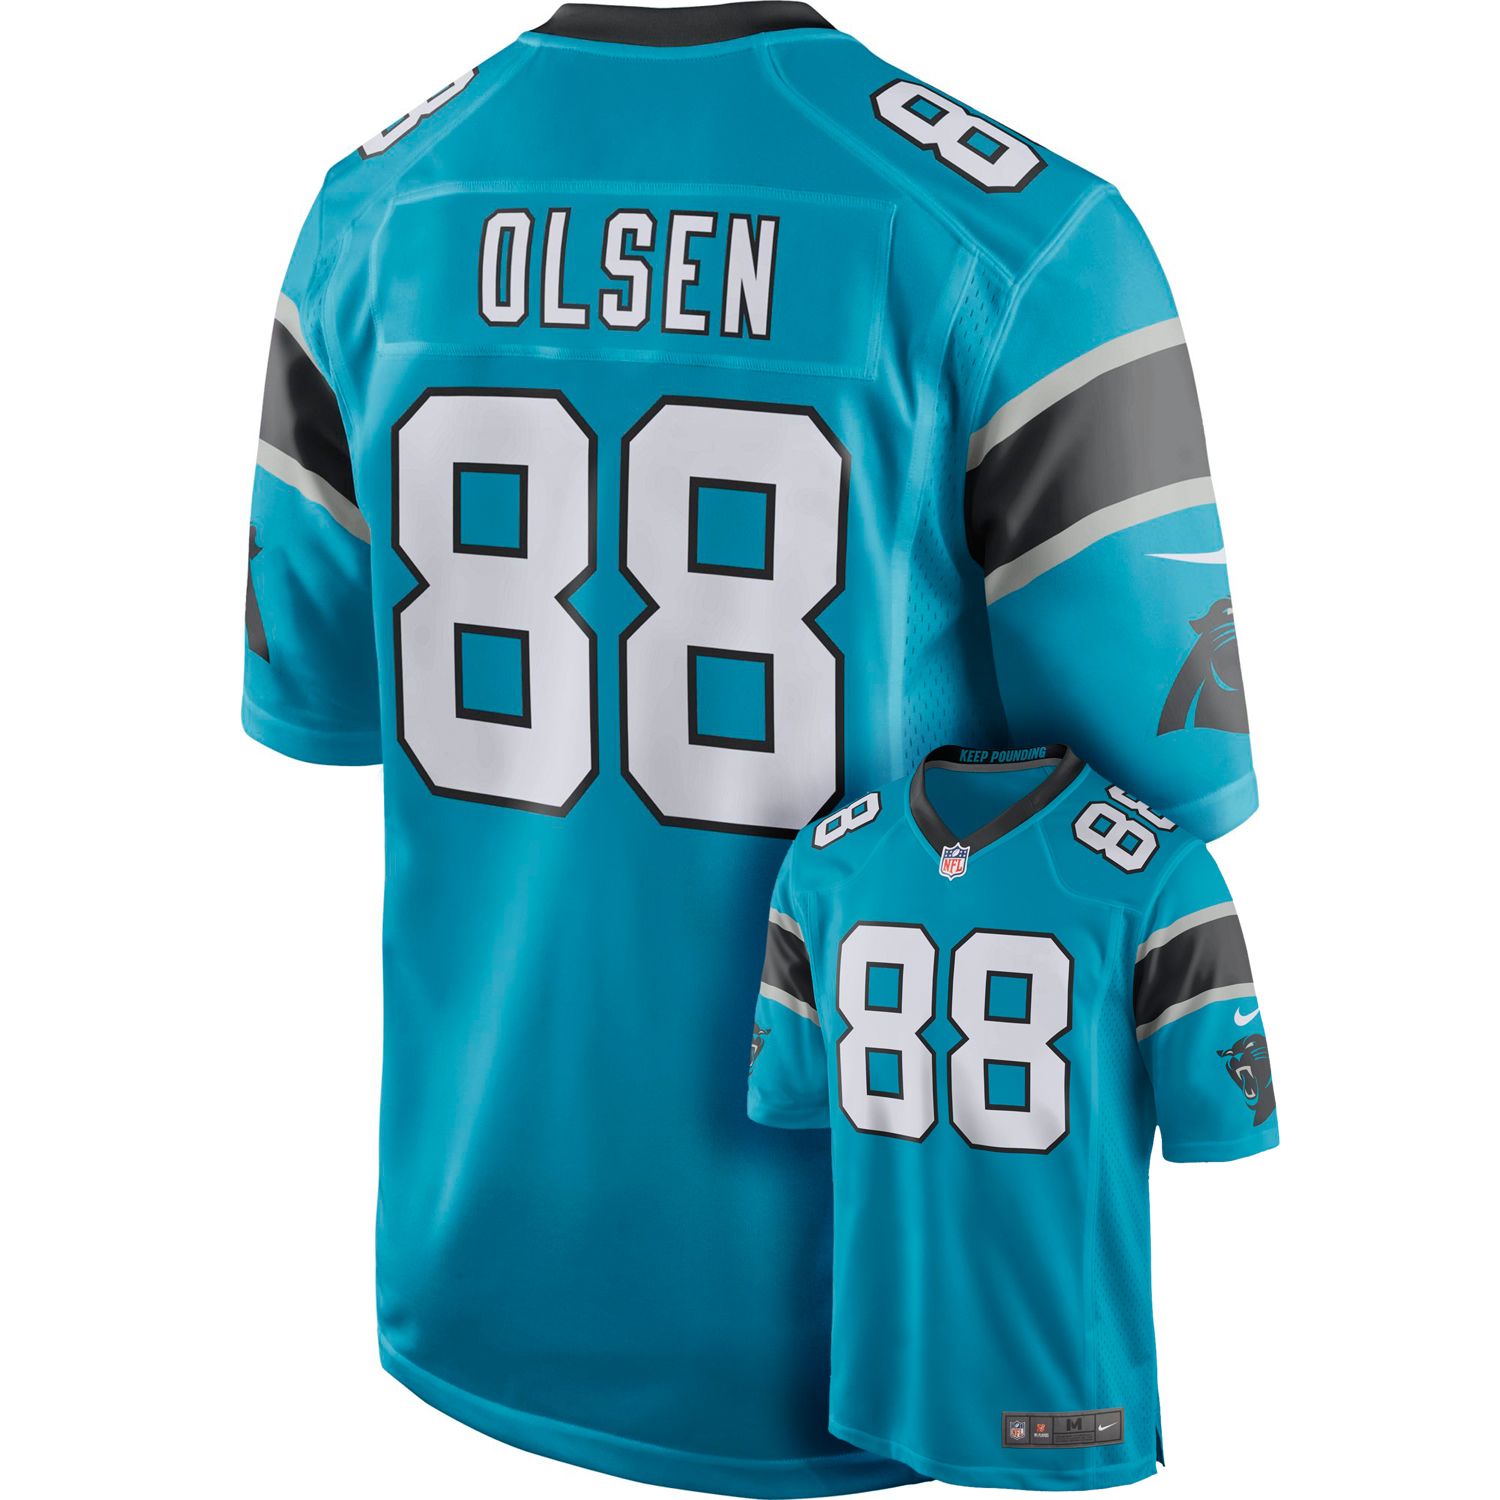 Greg Olsen Game NFL Replica Jersey